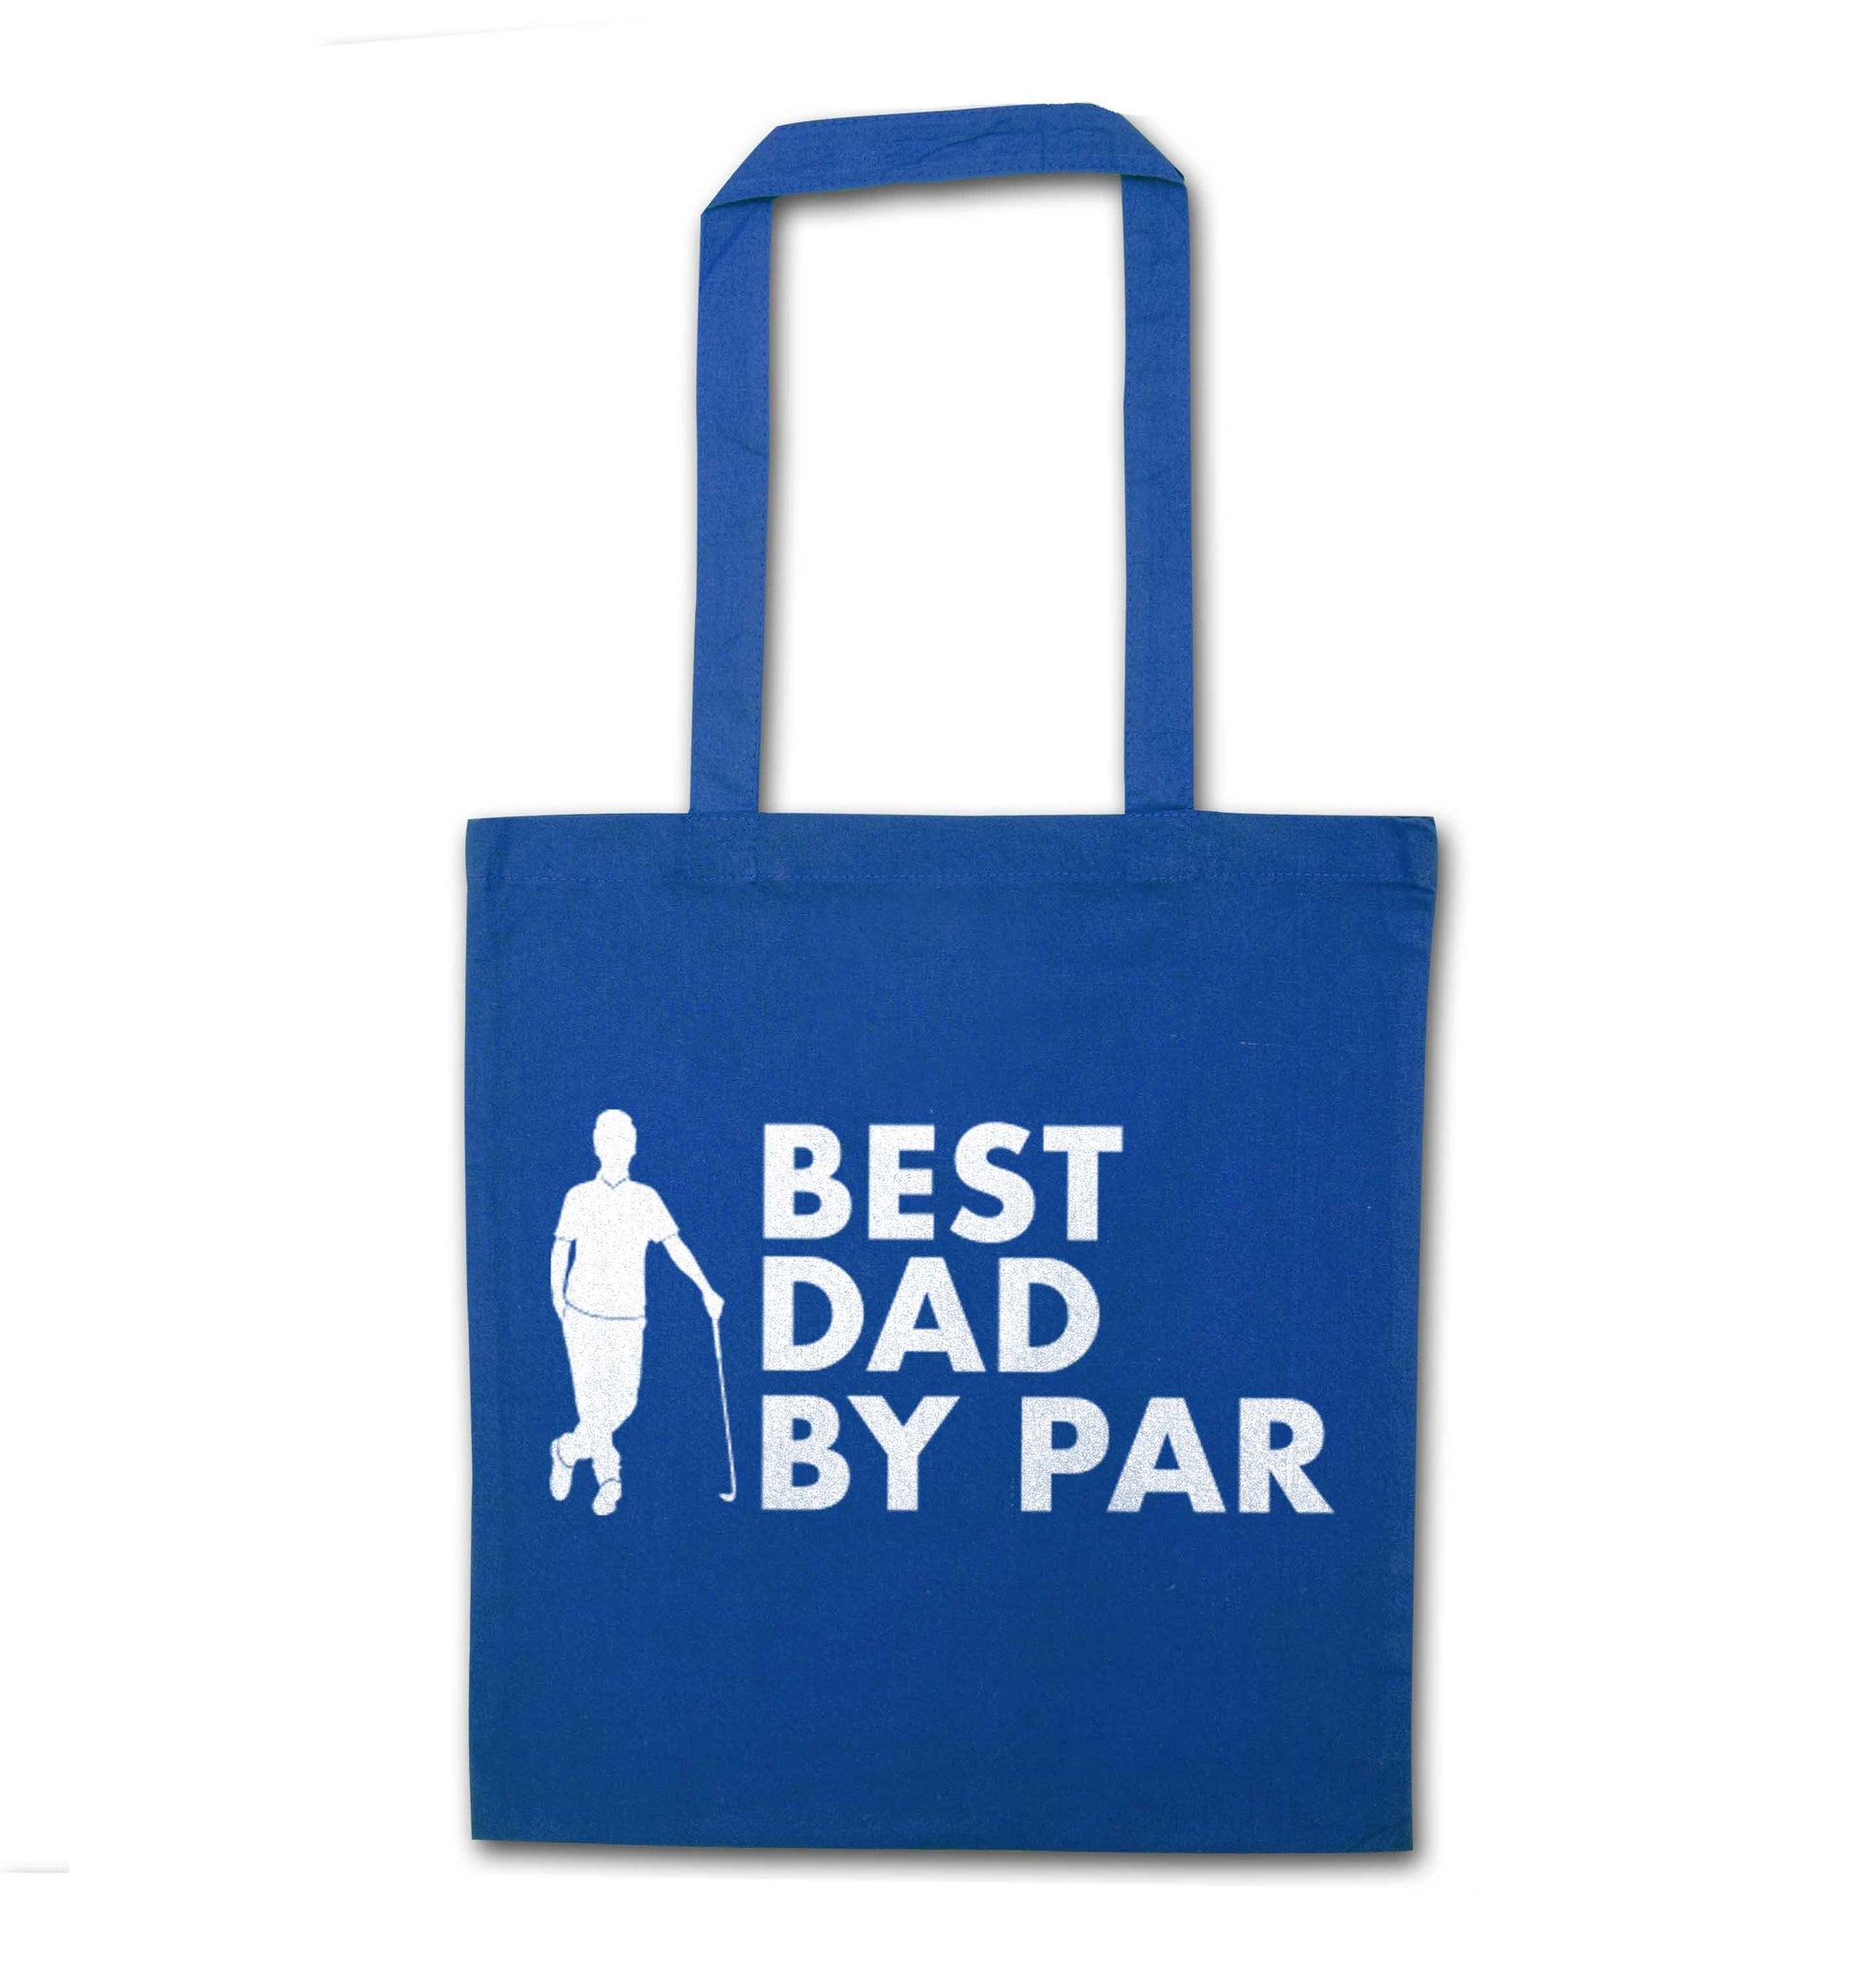 Best dad by par blue tote bag